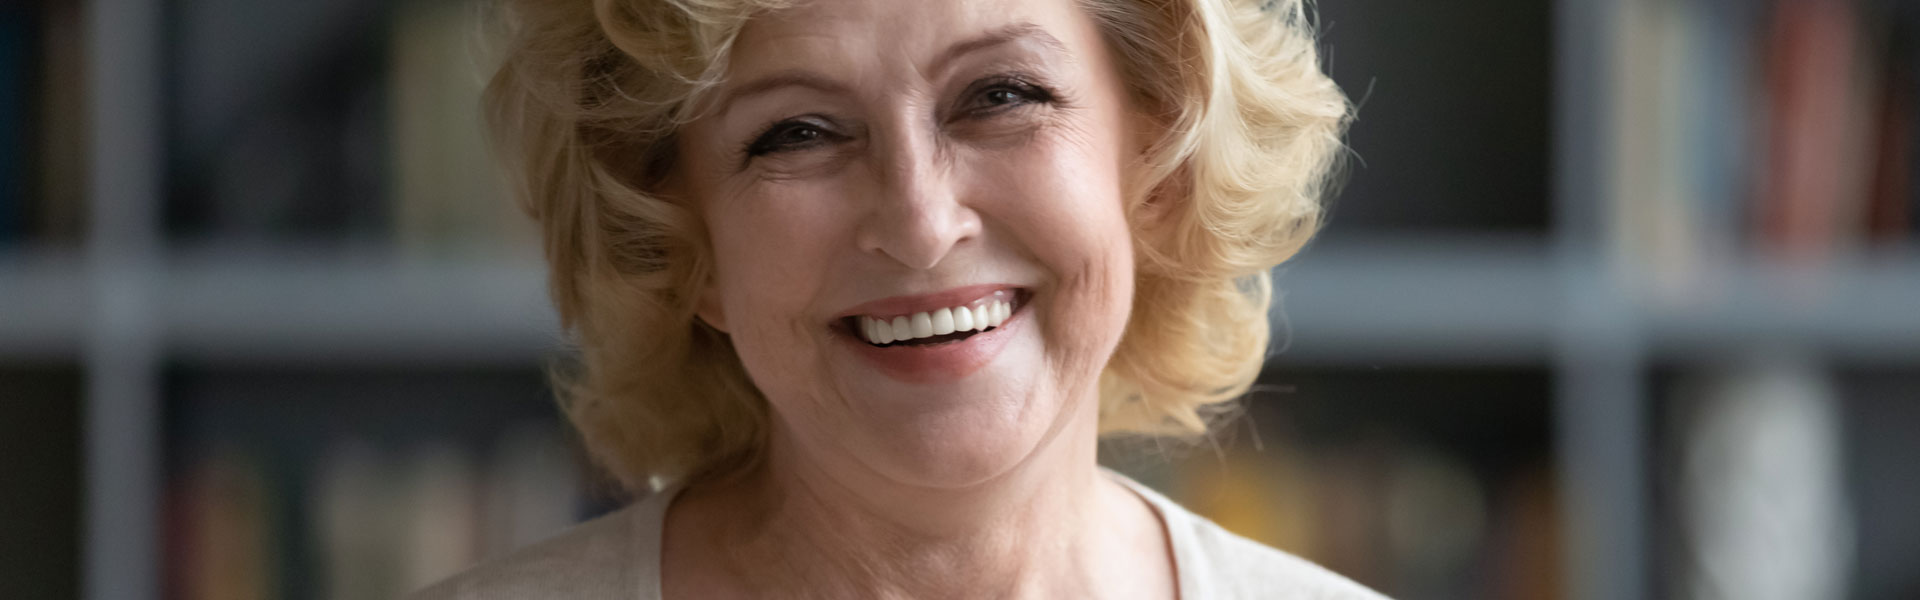 Happy elderly woman after having dental implant treatment